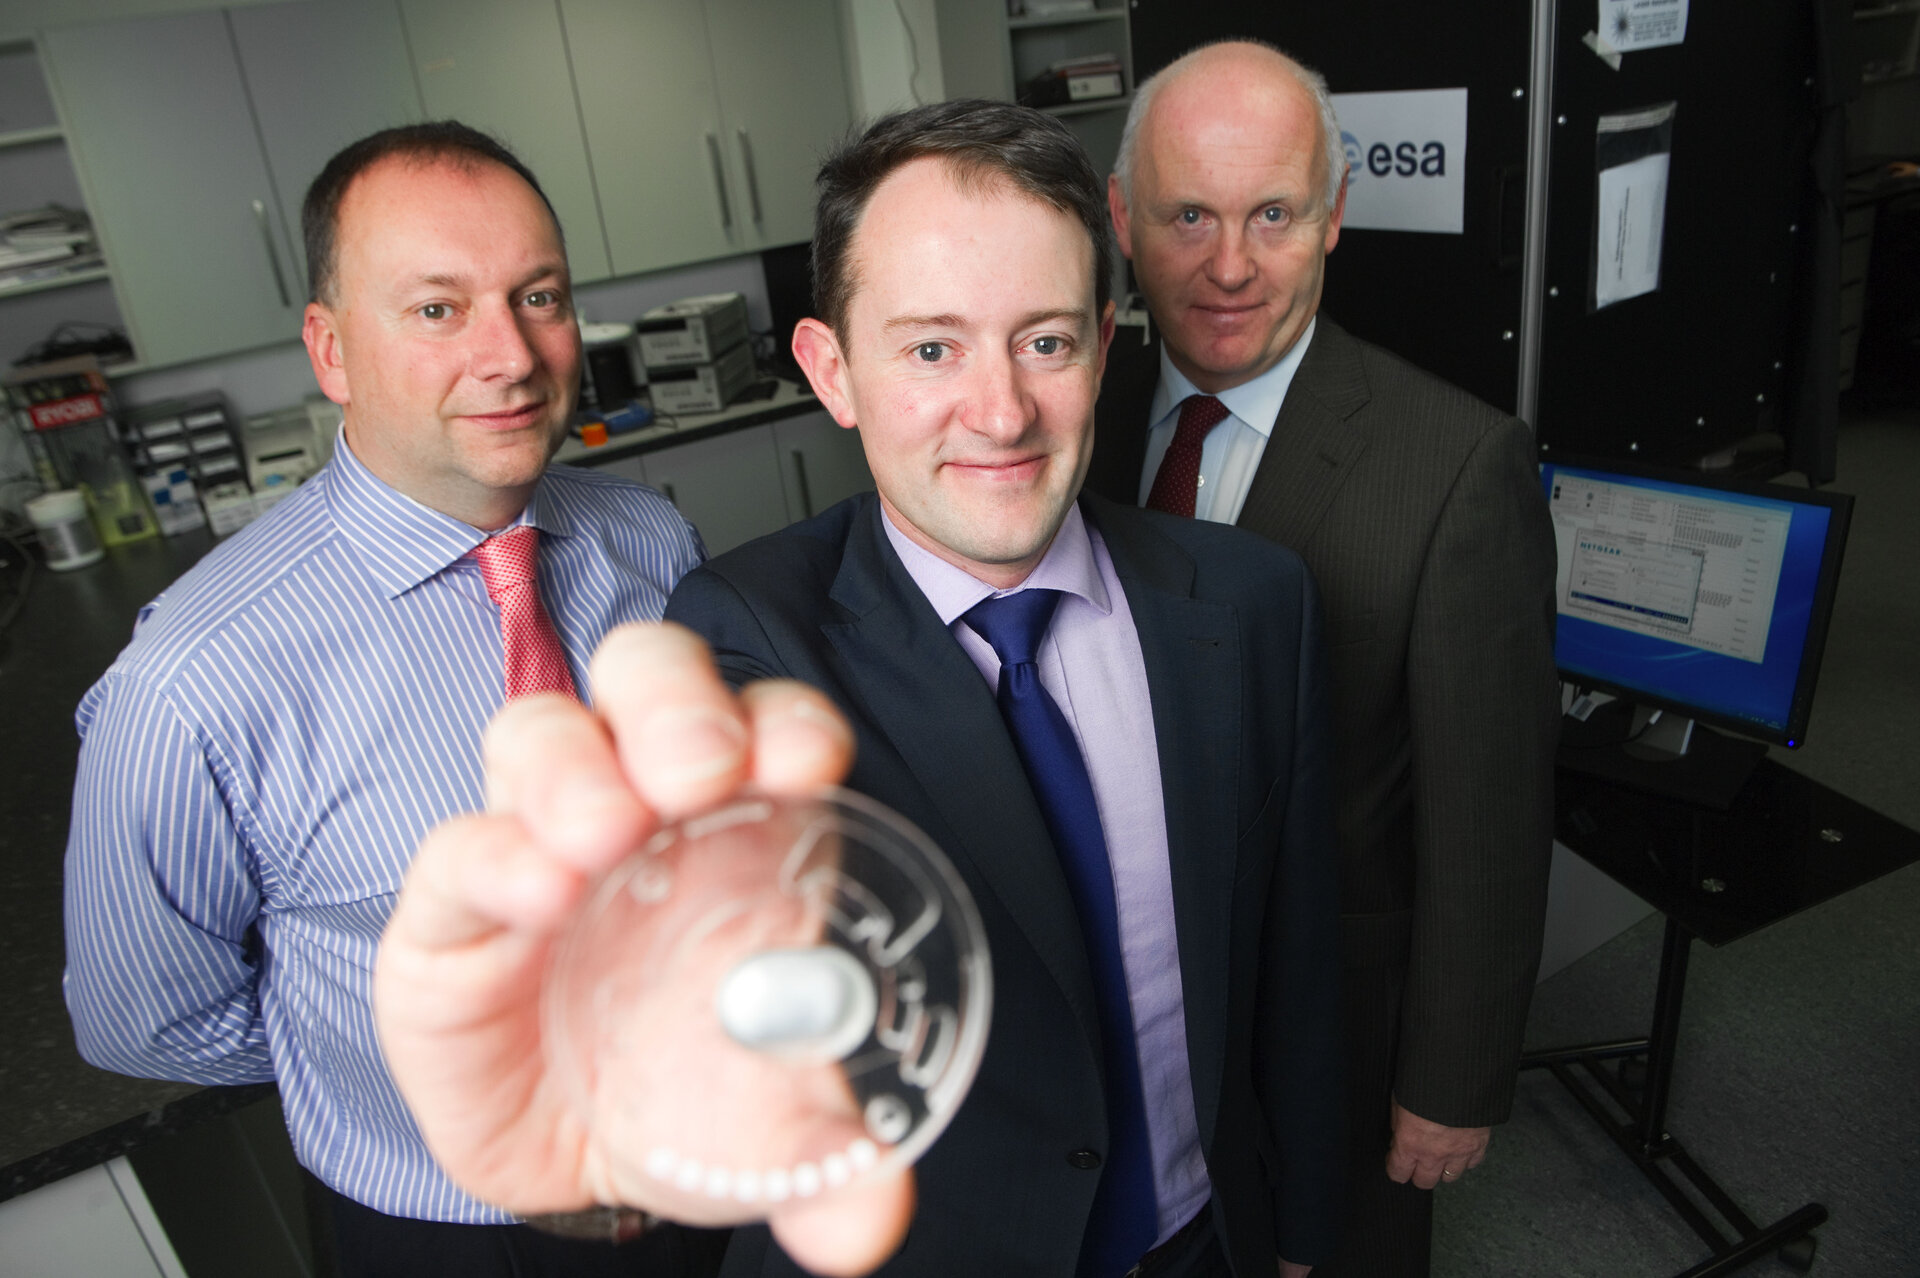 Ireland's Minister for Research & Innovation Seán Sherlock